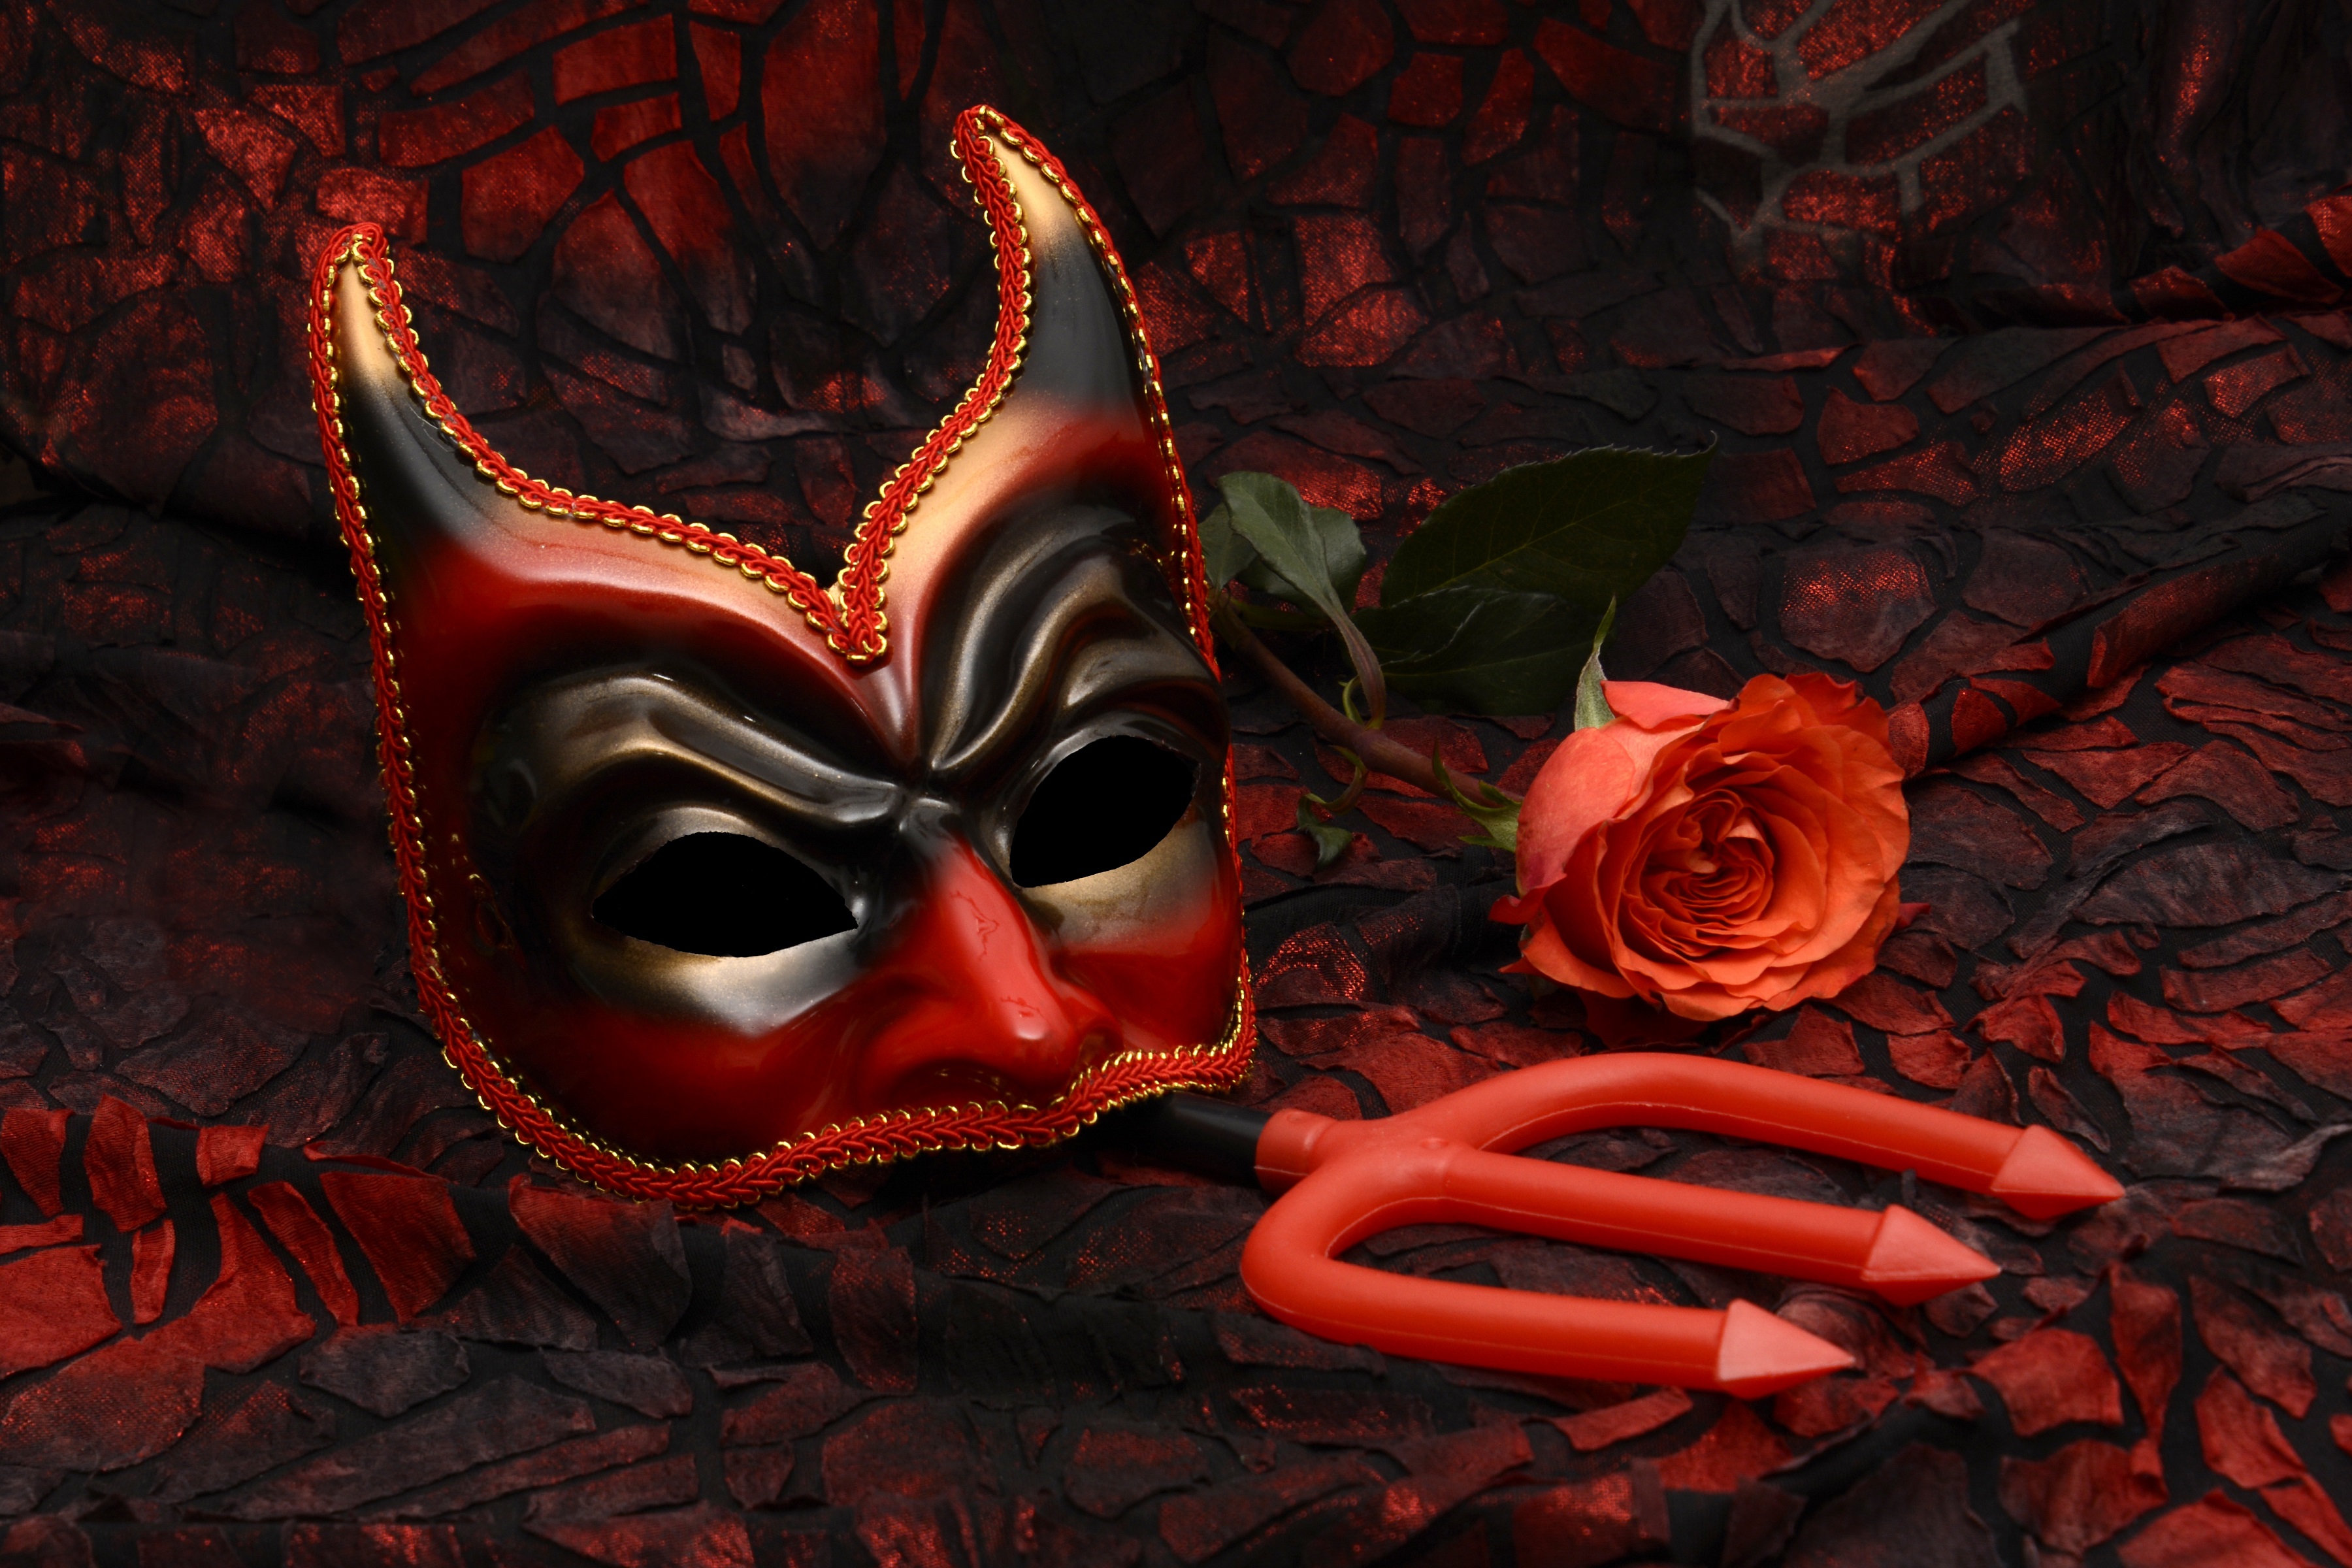 Mask Pitchfork Rose Flower Still Life Red 3600x2400